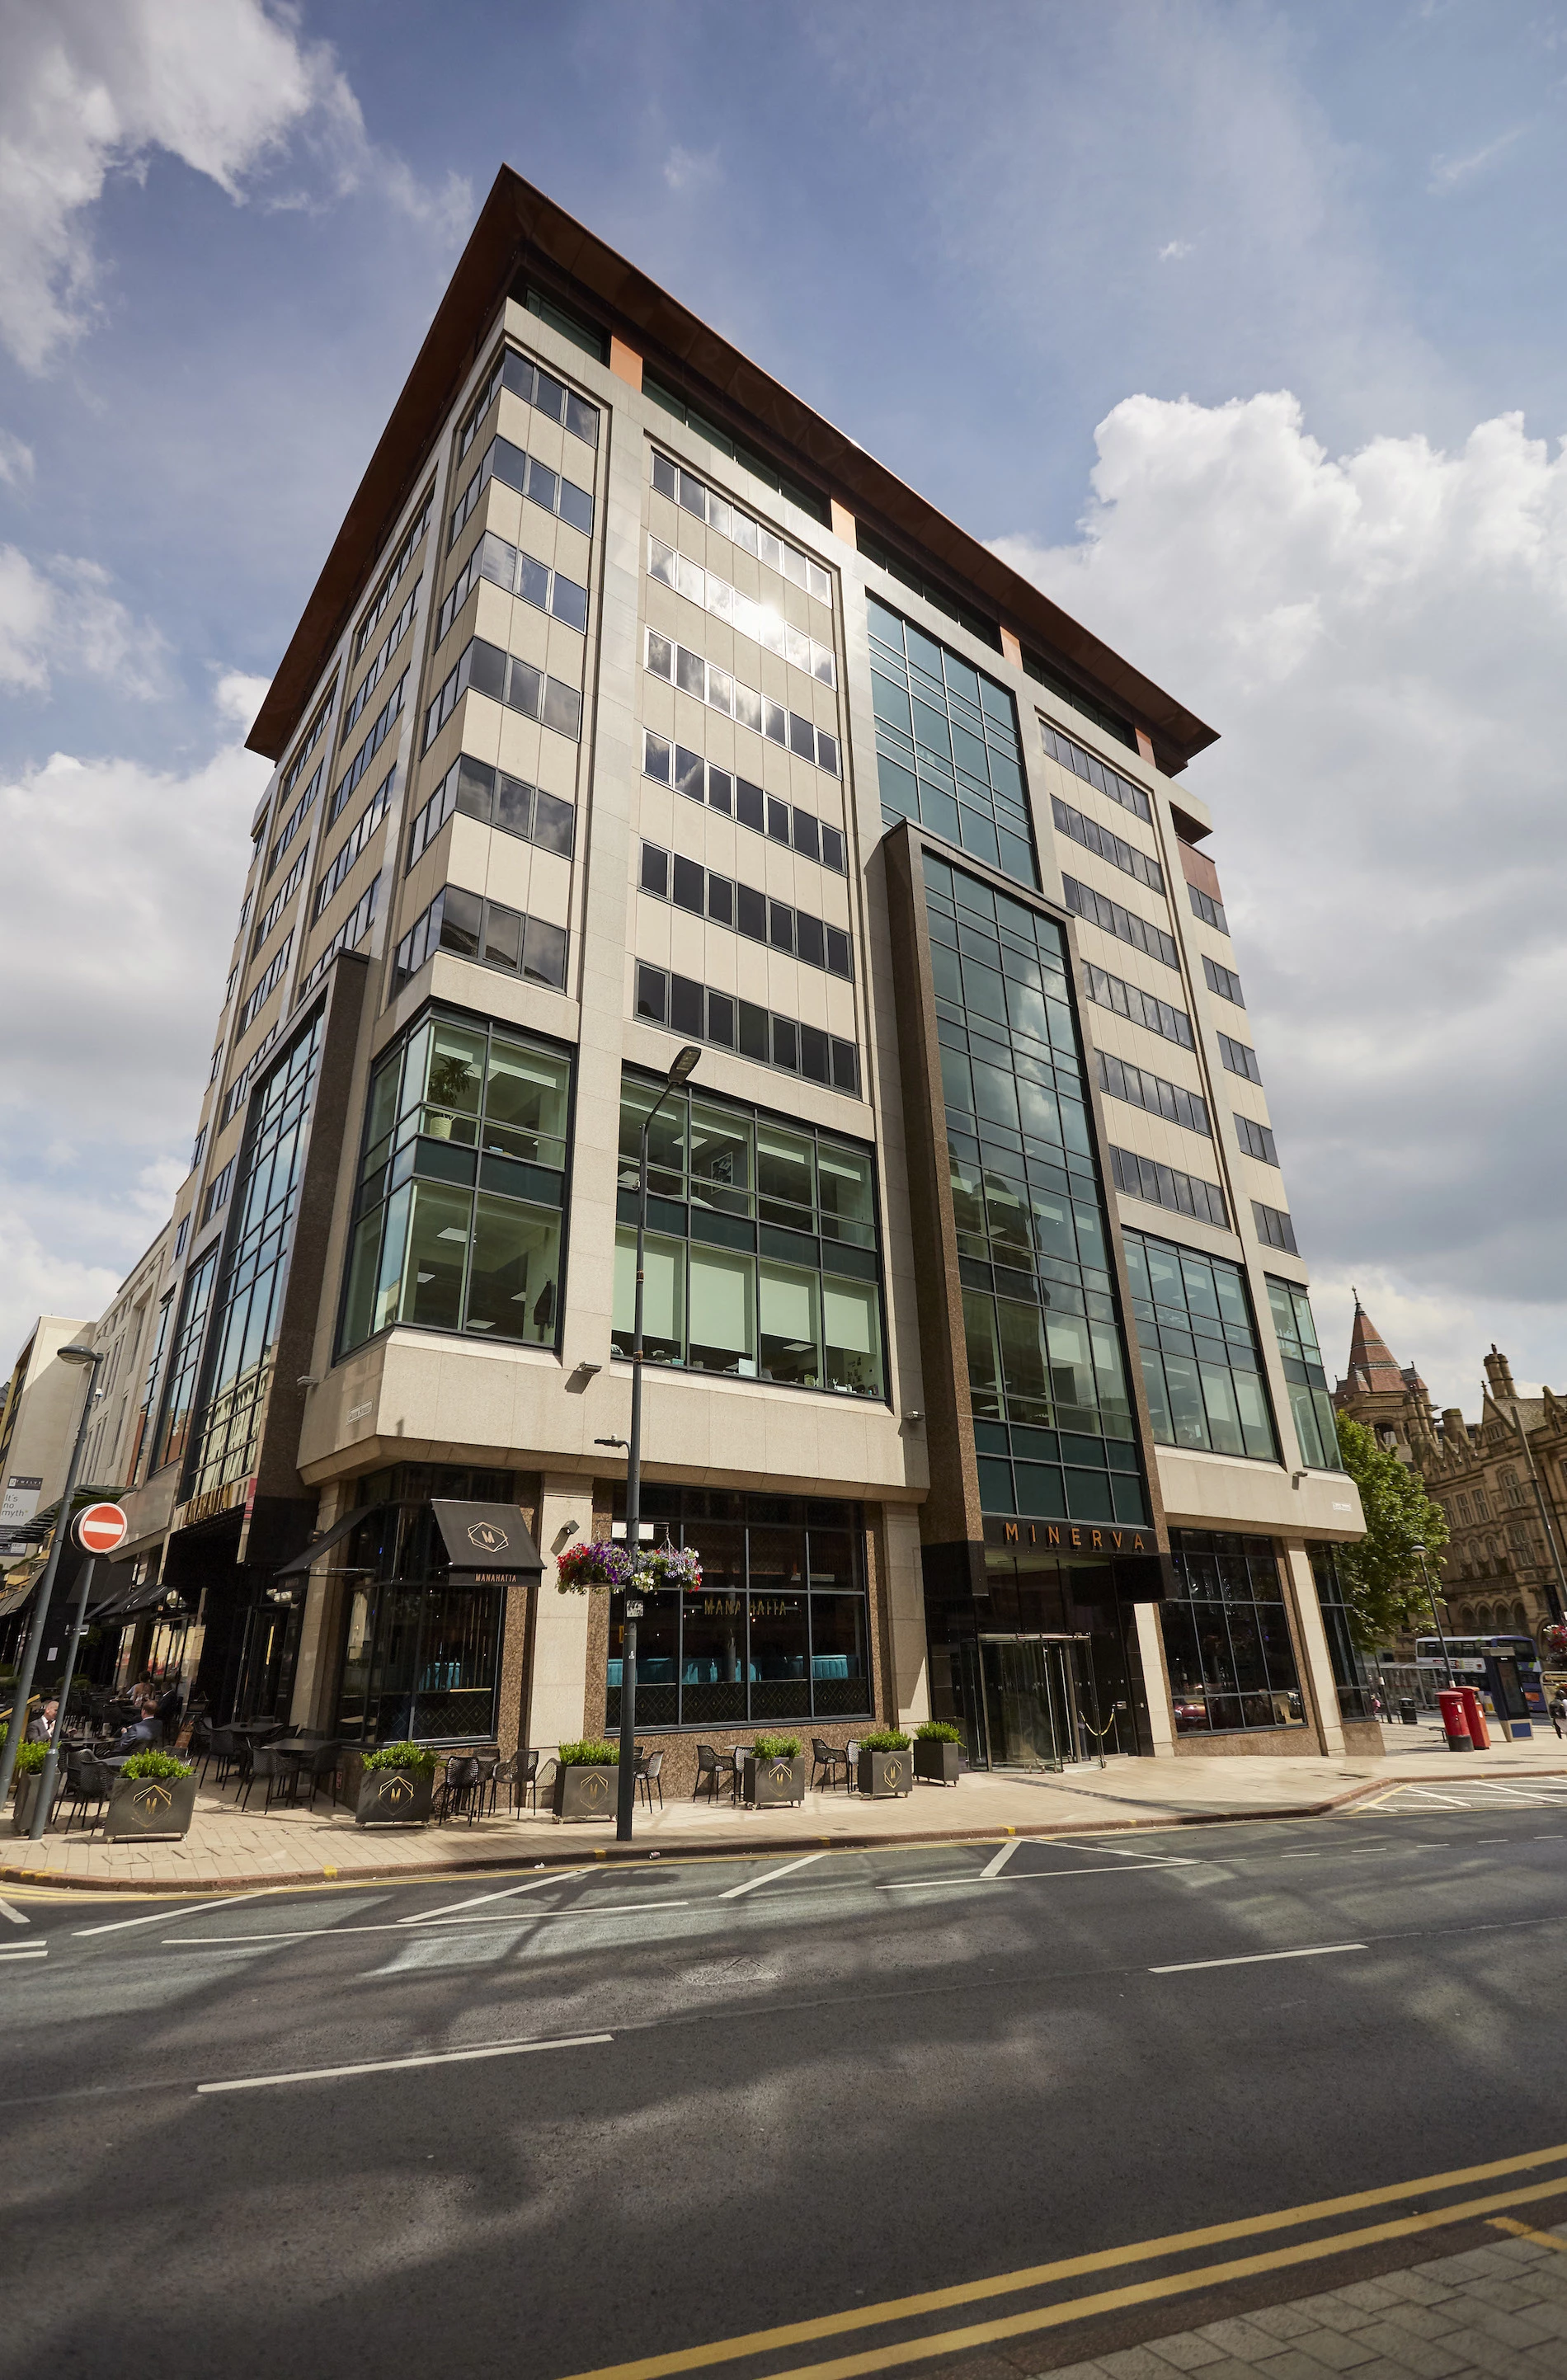 Minerva building within Leeds’ £25m Bond Court development.